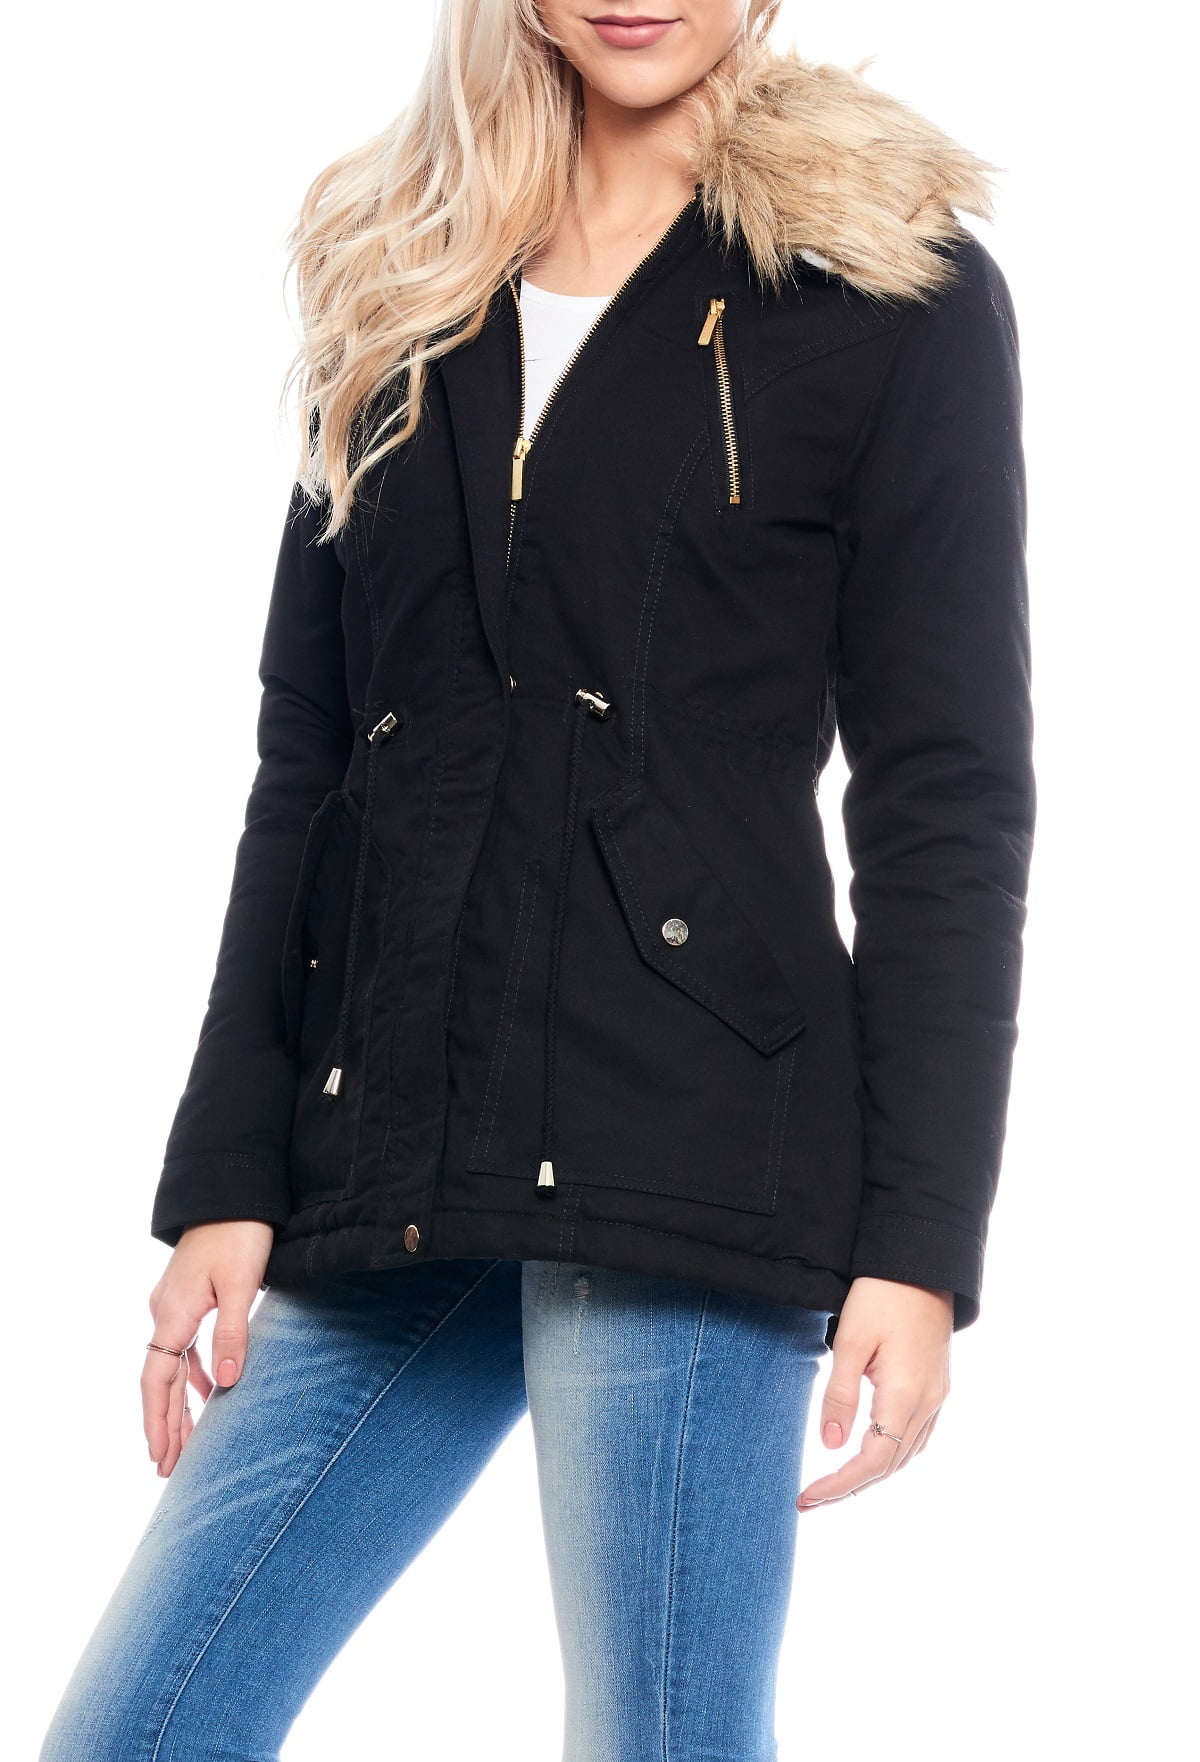 Paradox Sluiting neef Lady's Double-Closure Parka Jacket w/ Detachable Fur Trim Collar -  Walmart.com